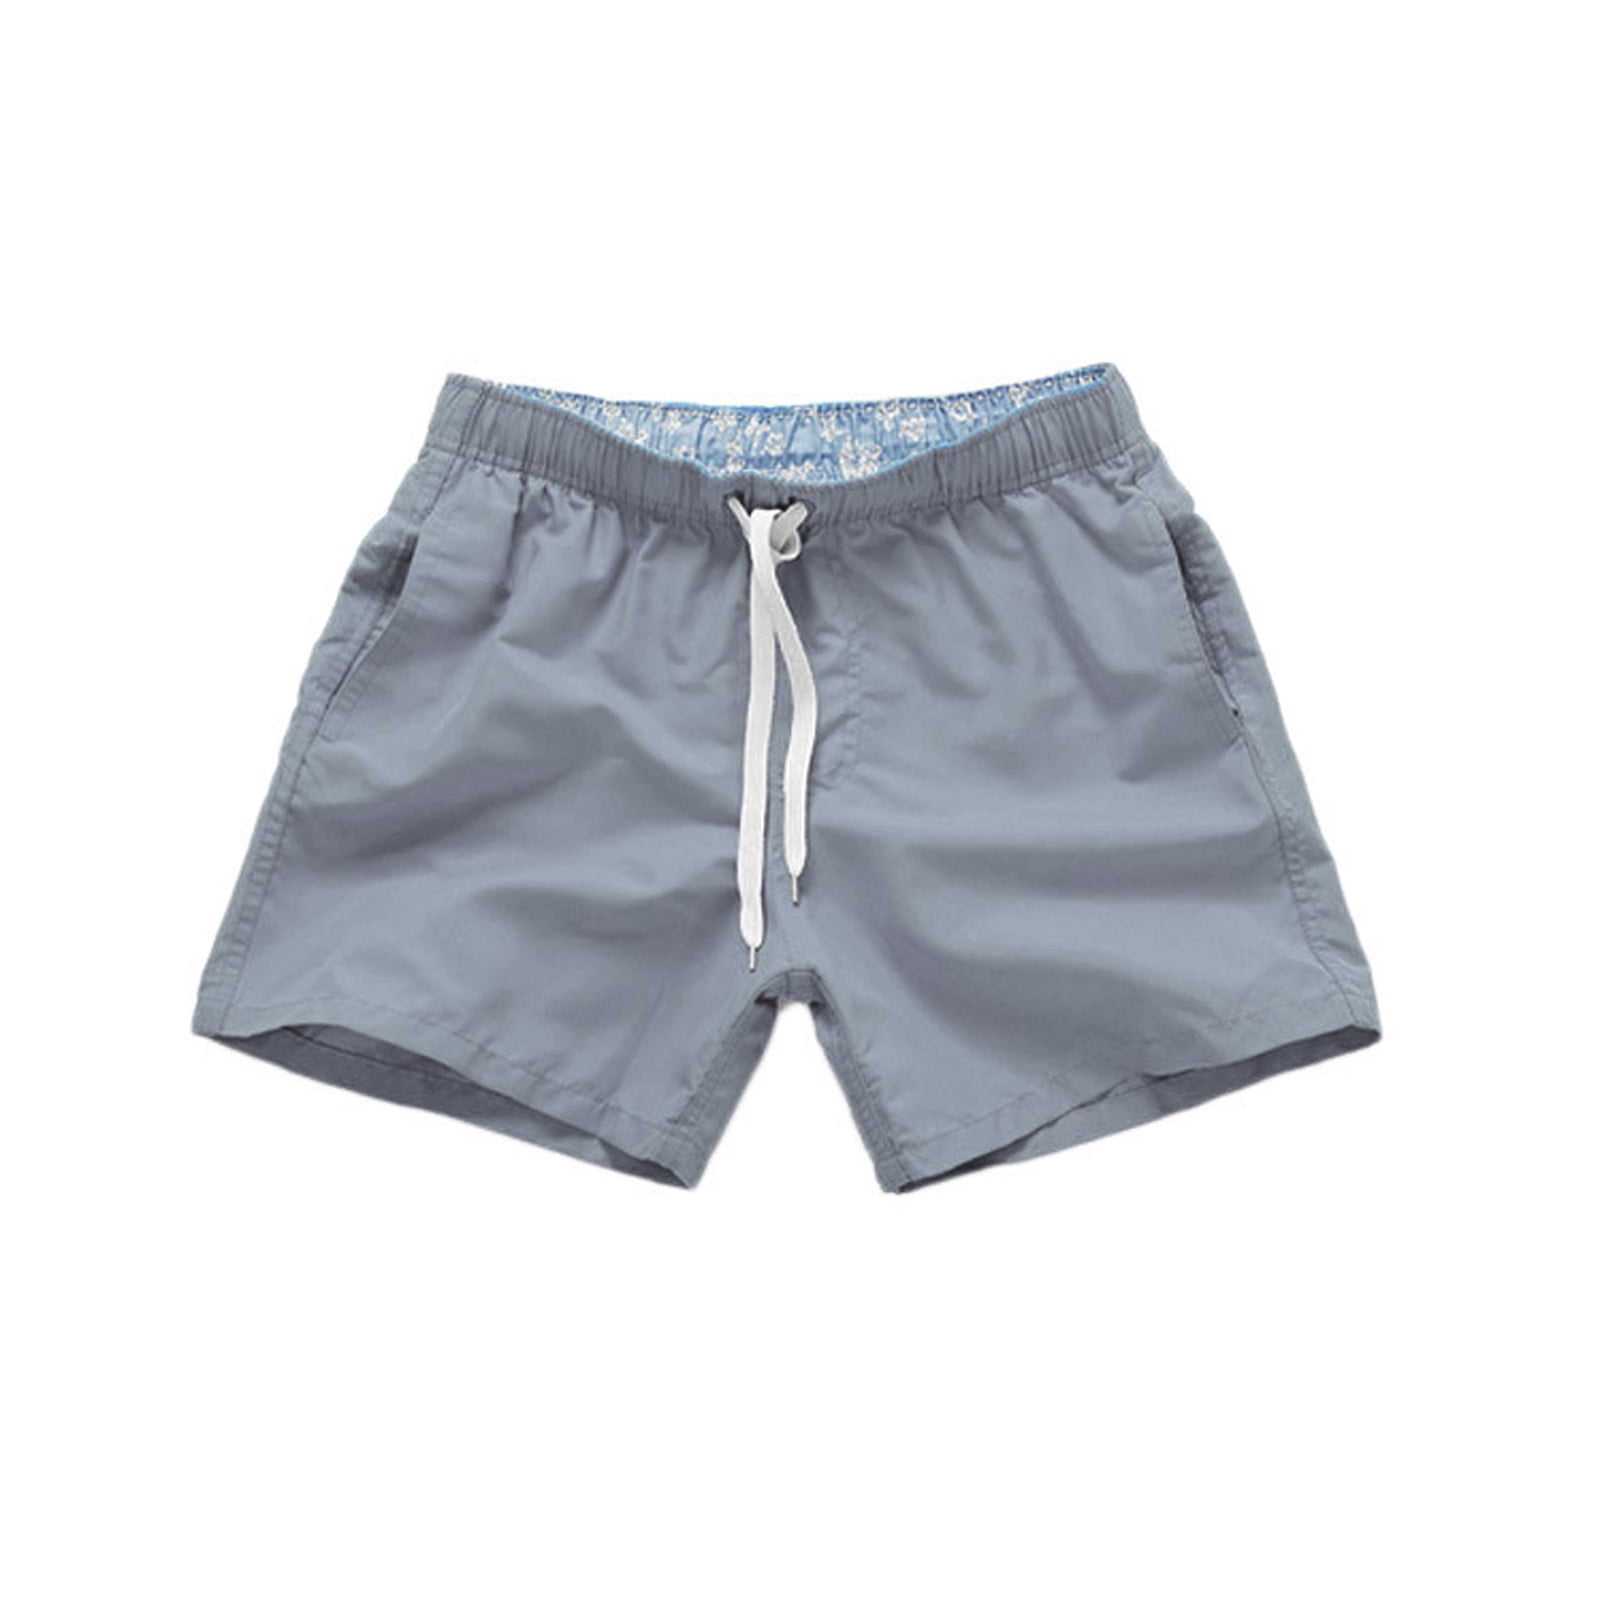 Kagetolytai Mens Shorts Men's Quick Dry Beach Pants Plain Three Quarter ...